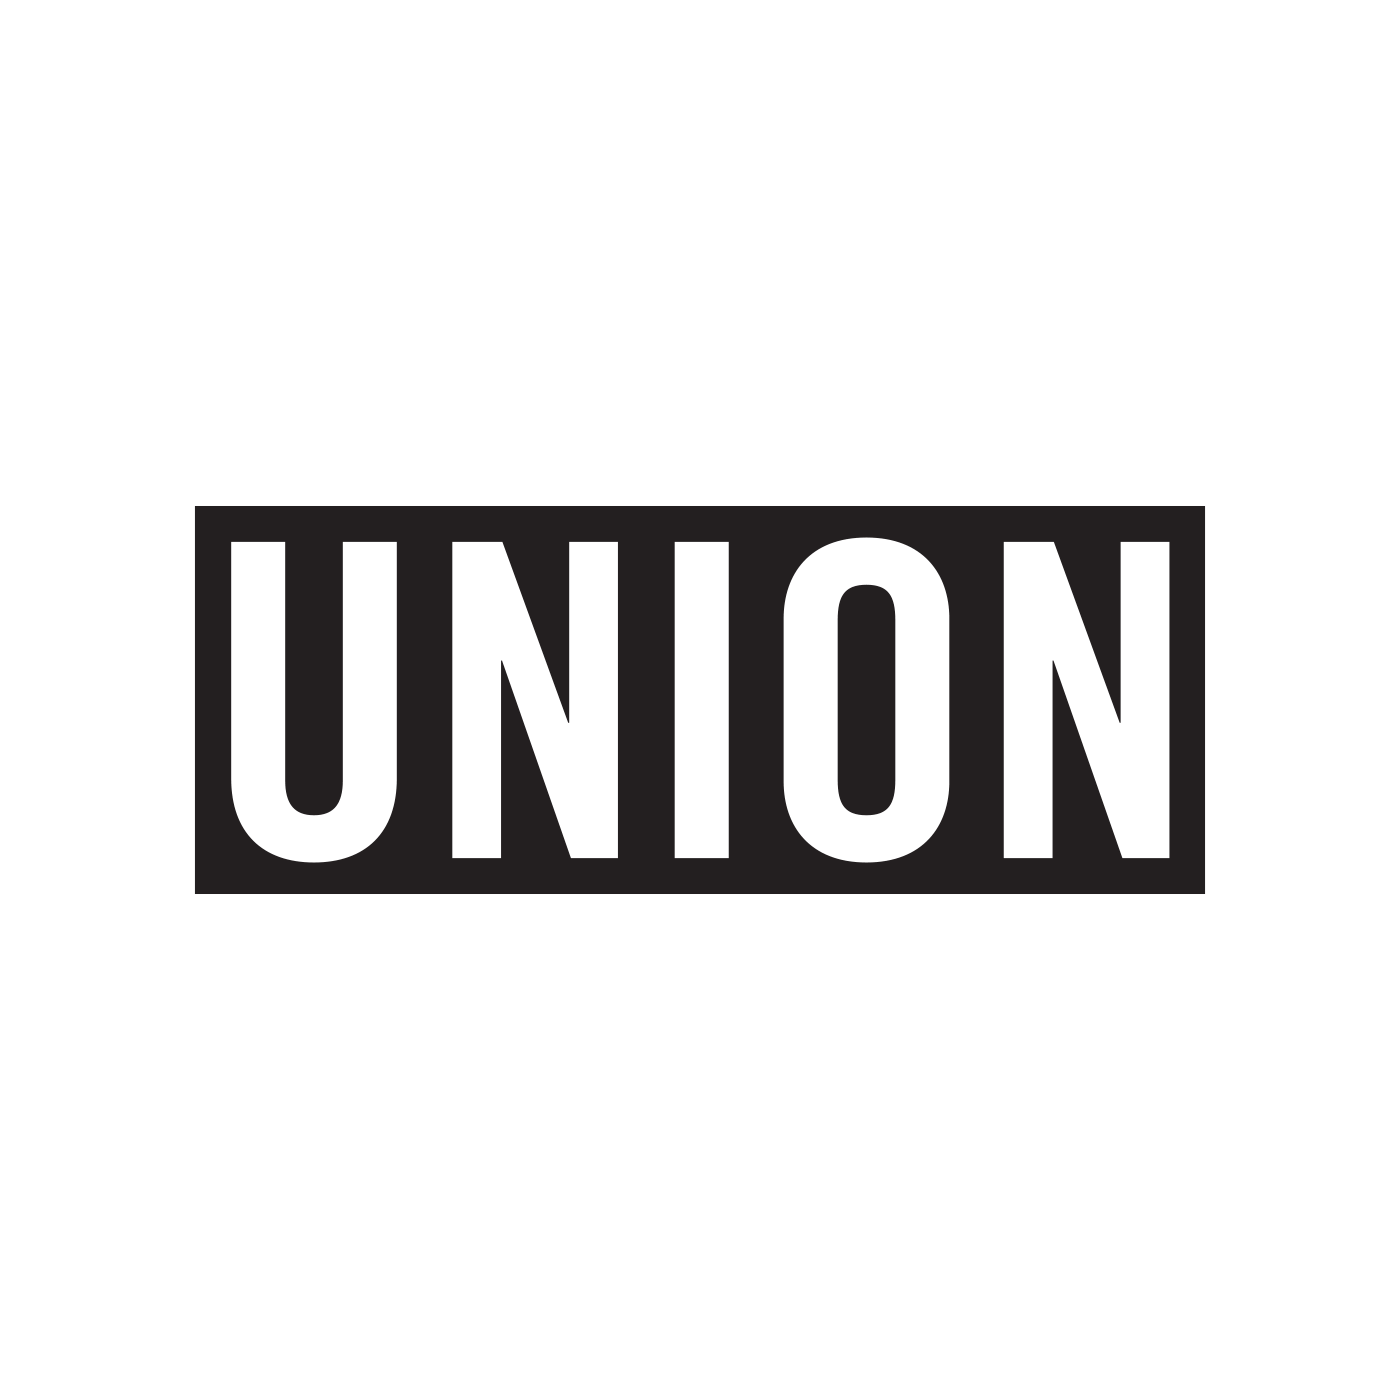 Union Binding Union Box Logo Sticker - Gravitee Boardshop